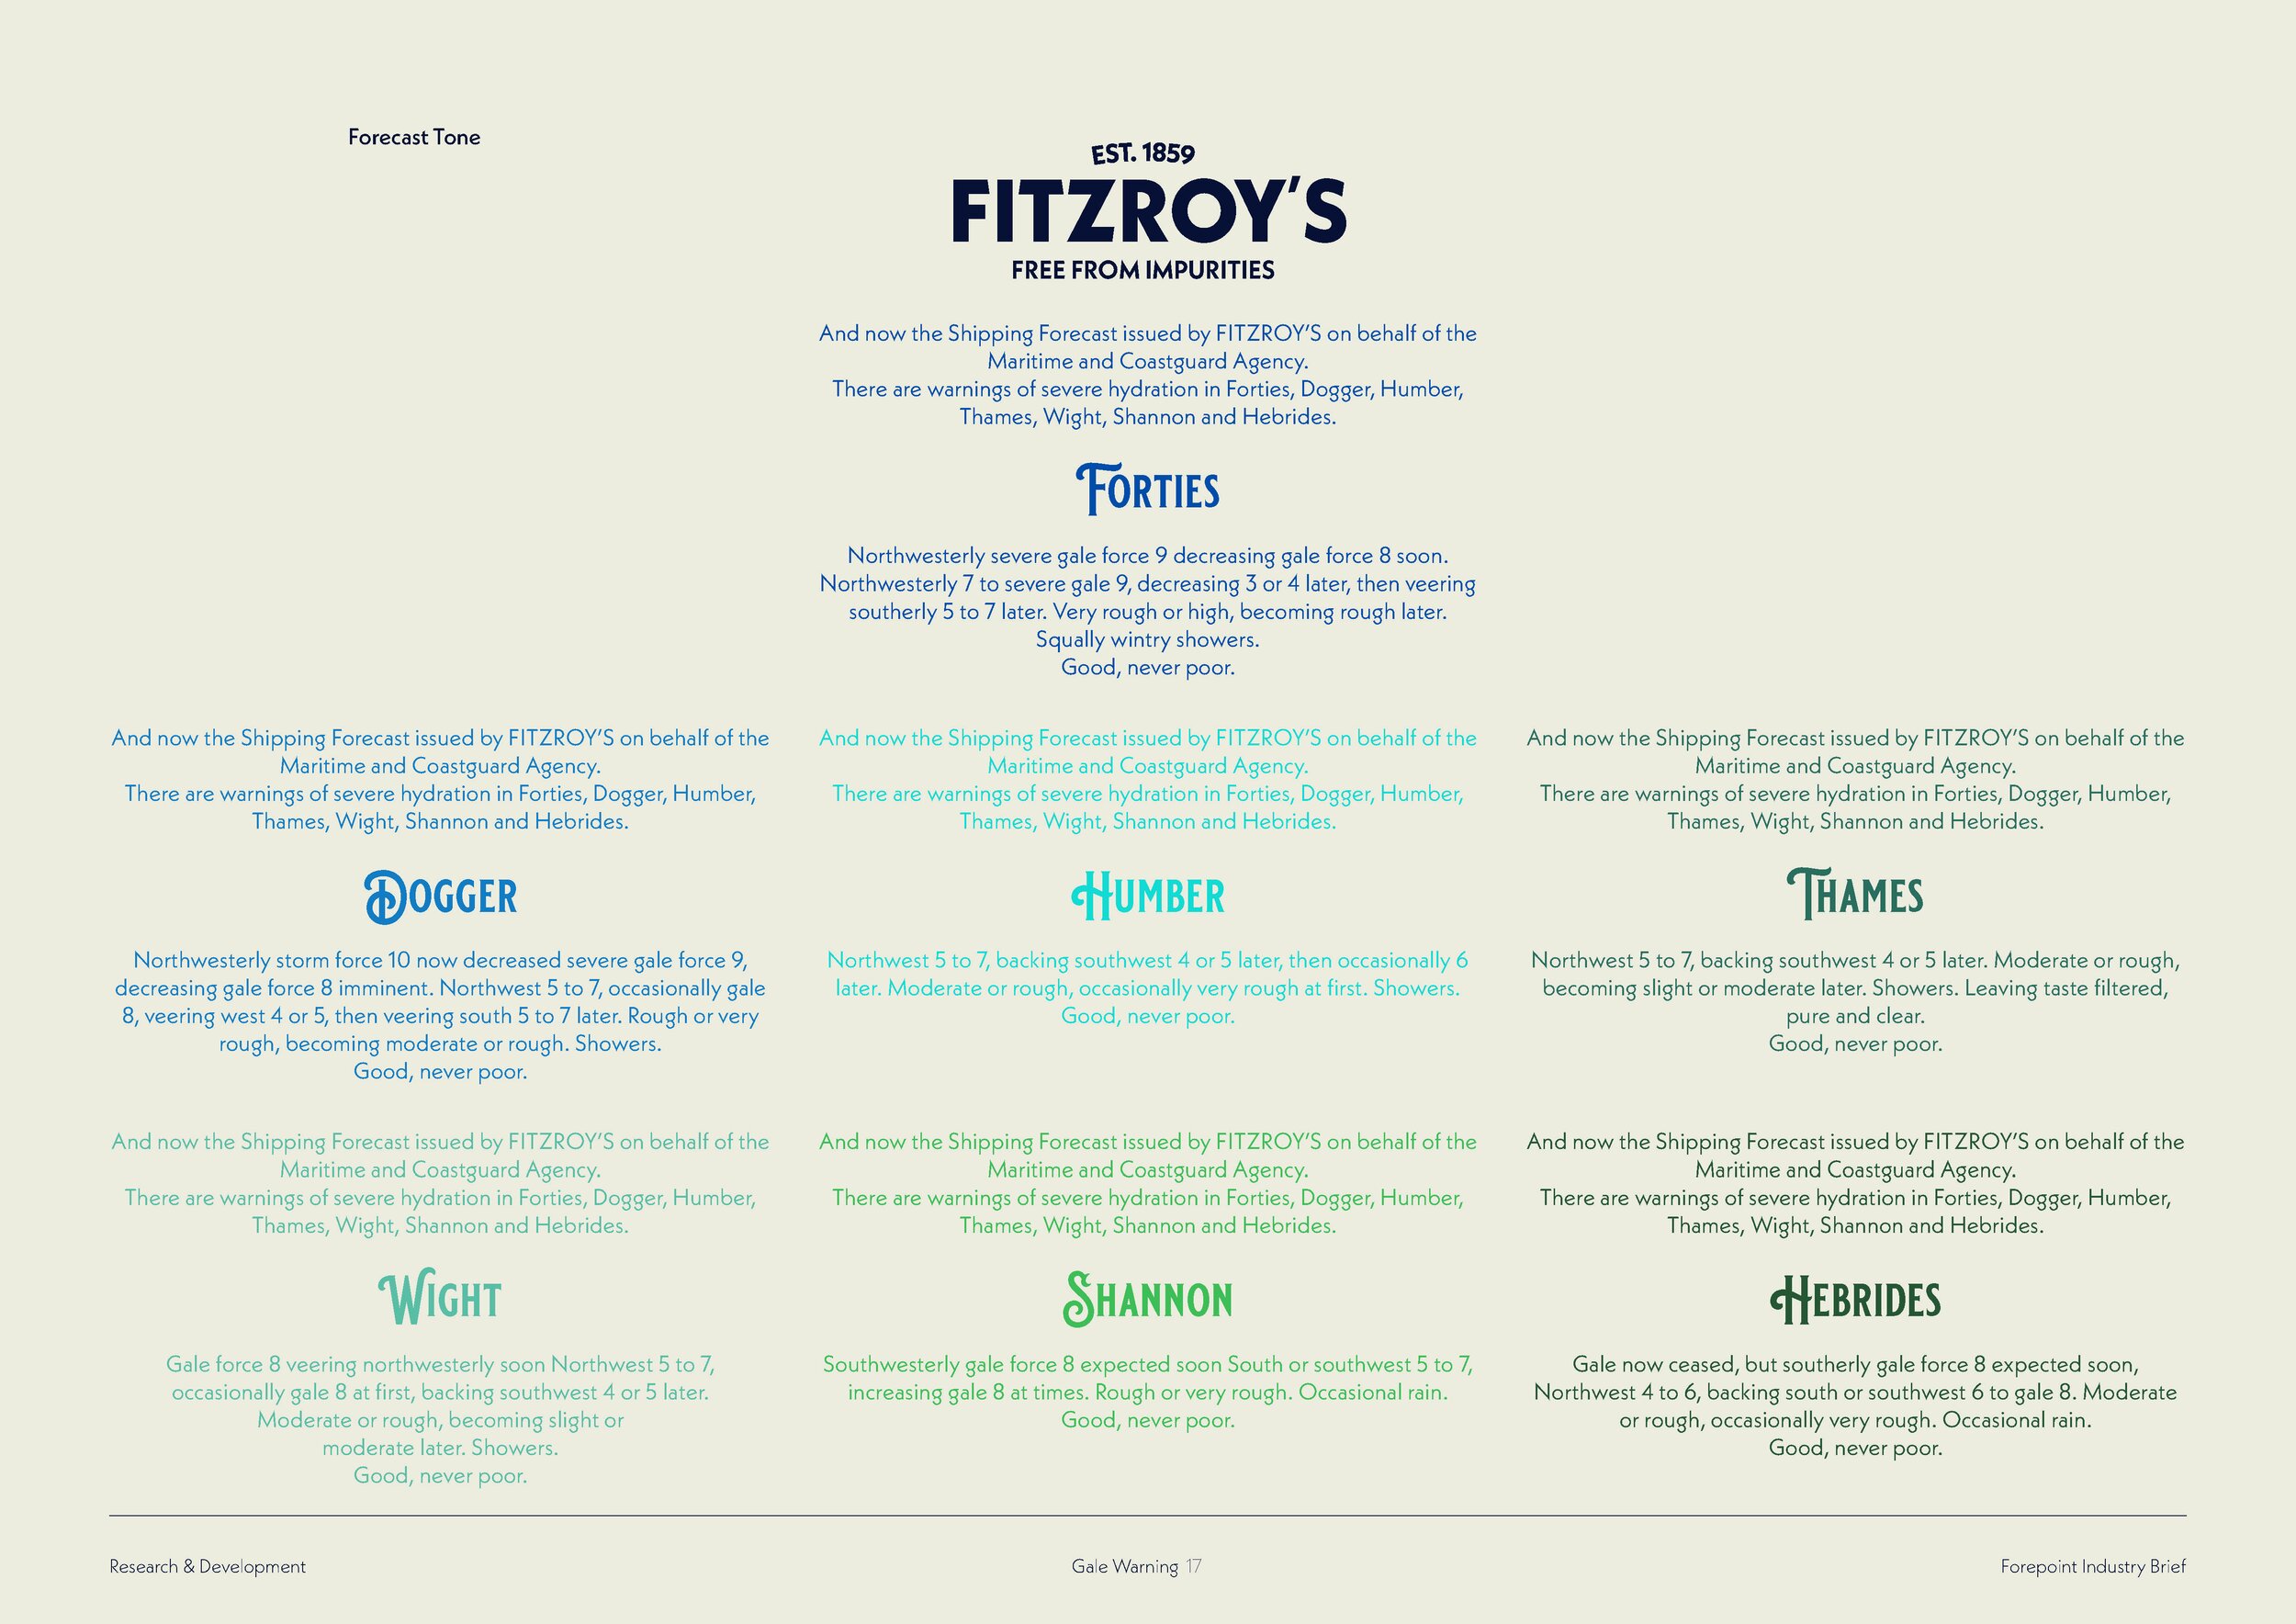 FitzRoy'sResearchDevelopment_Page_17.jpg